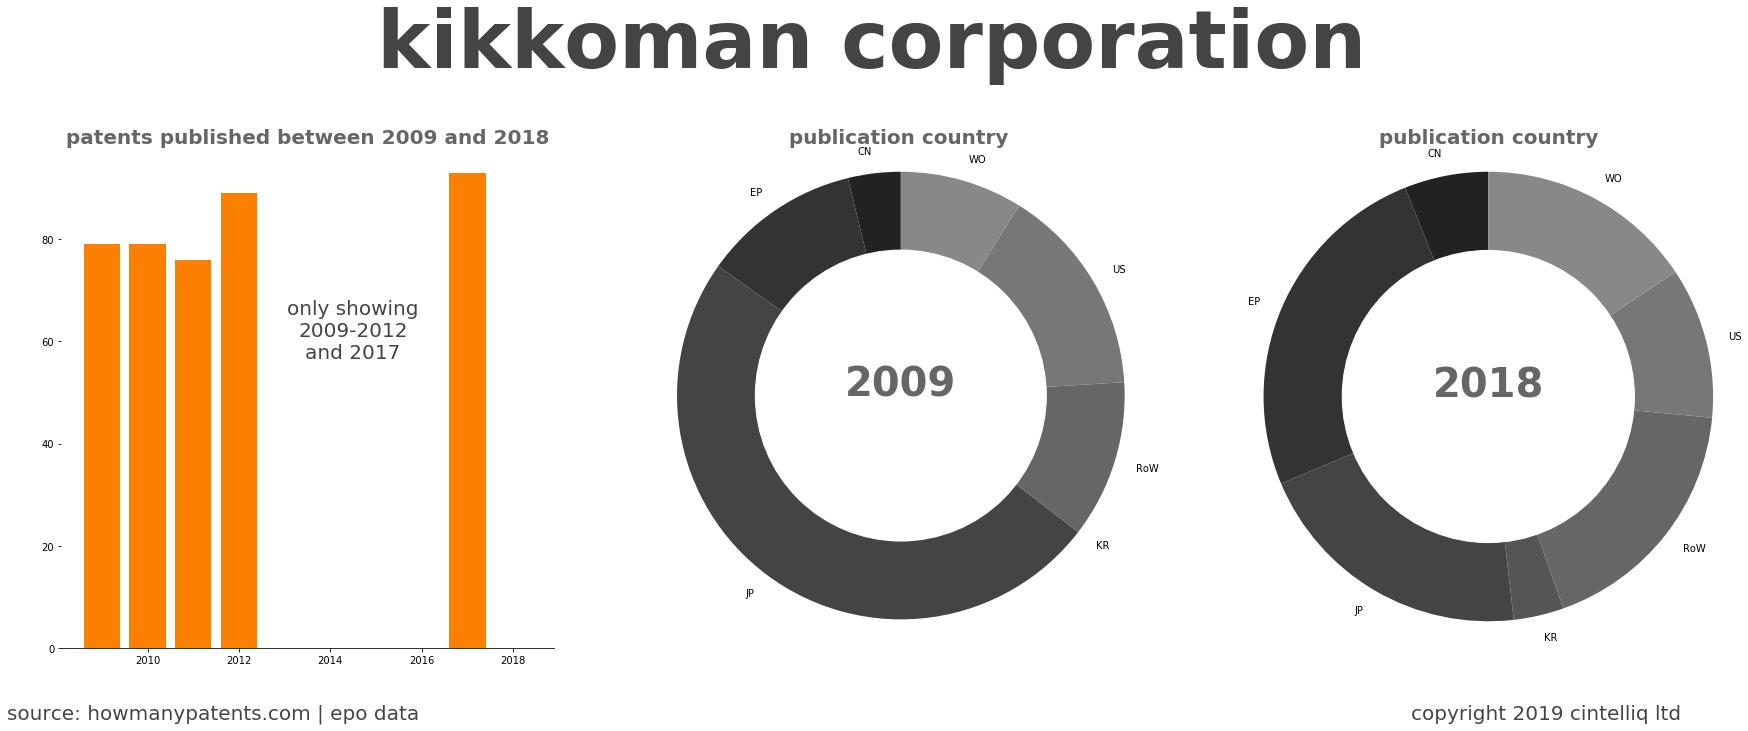 summary of patents for Kikkoman Corporation